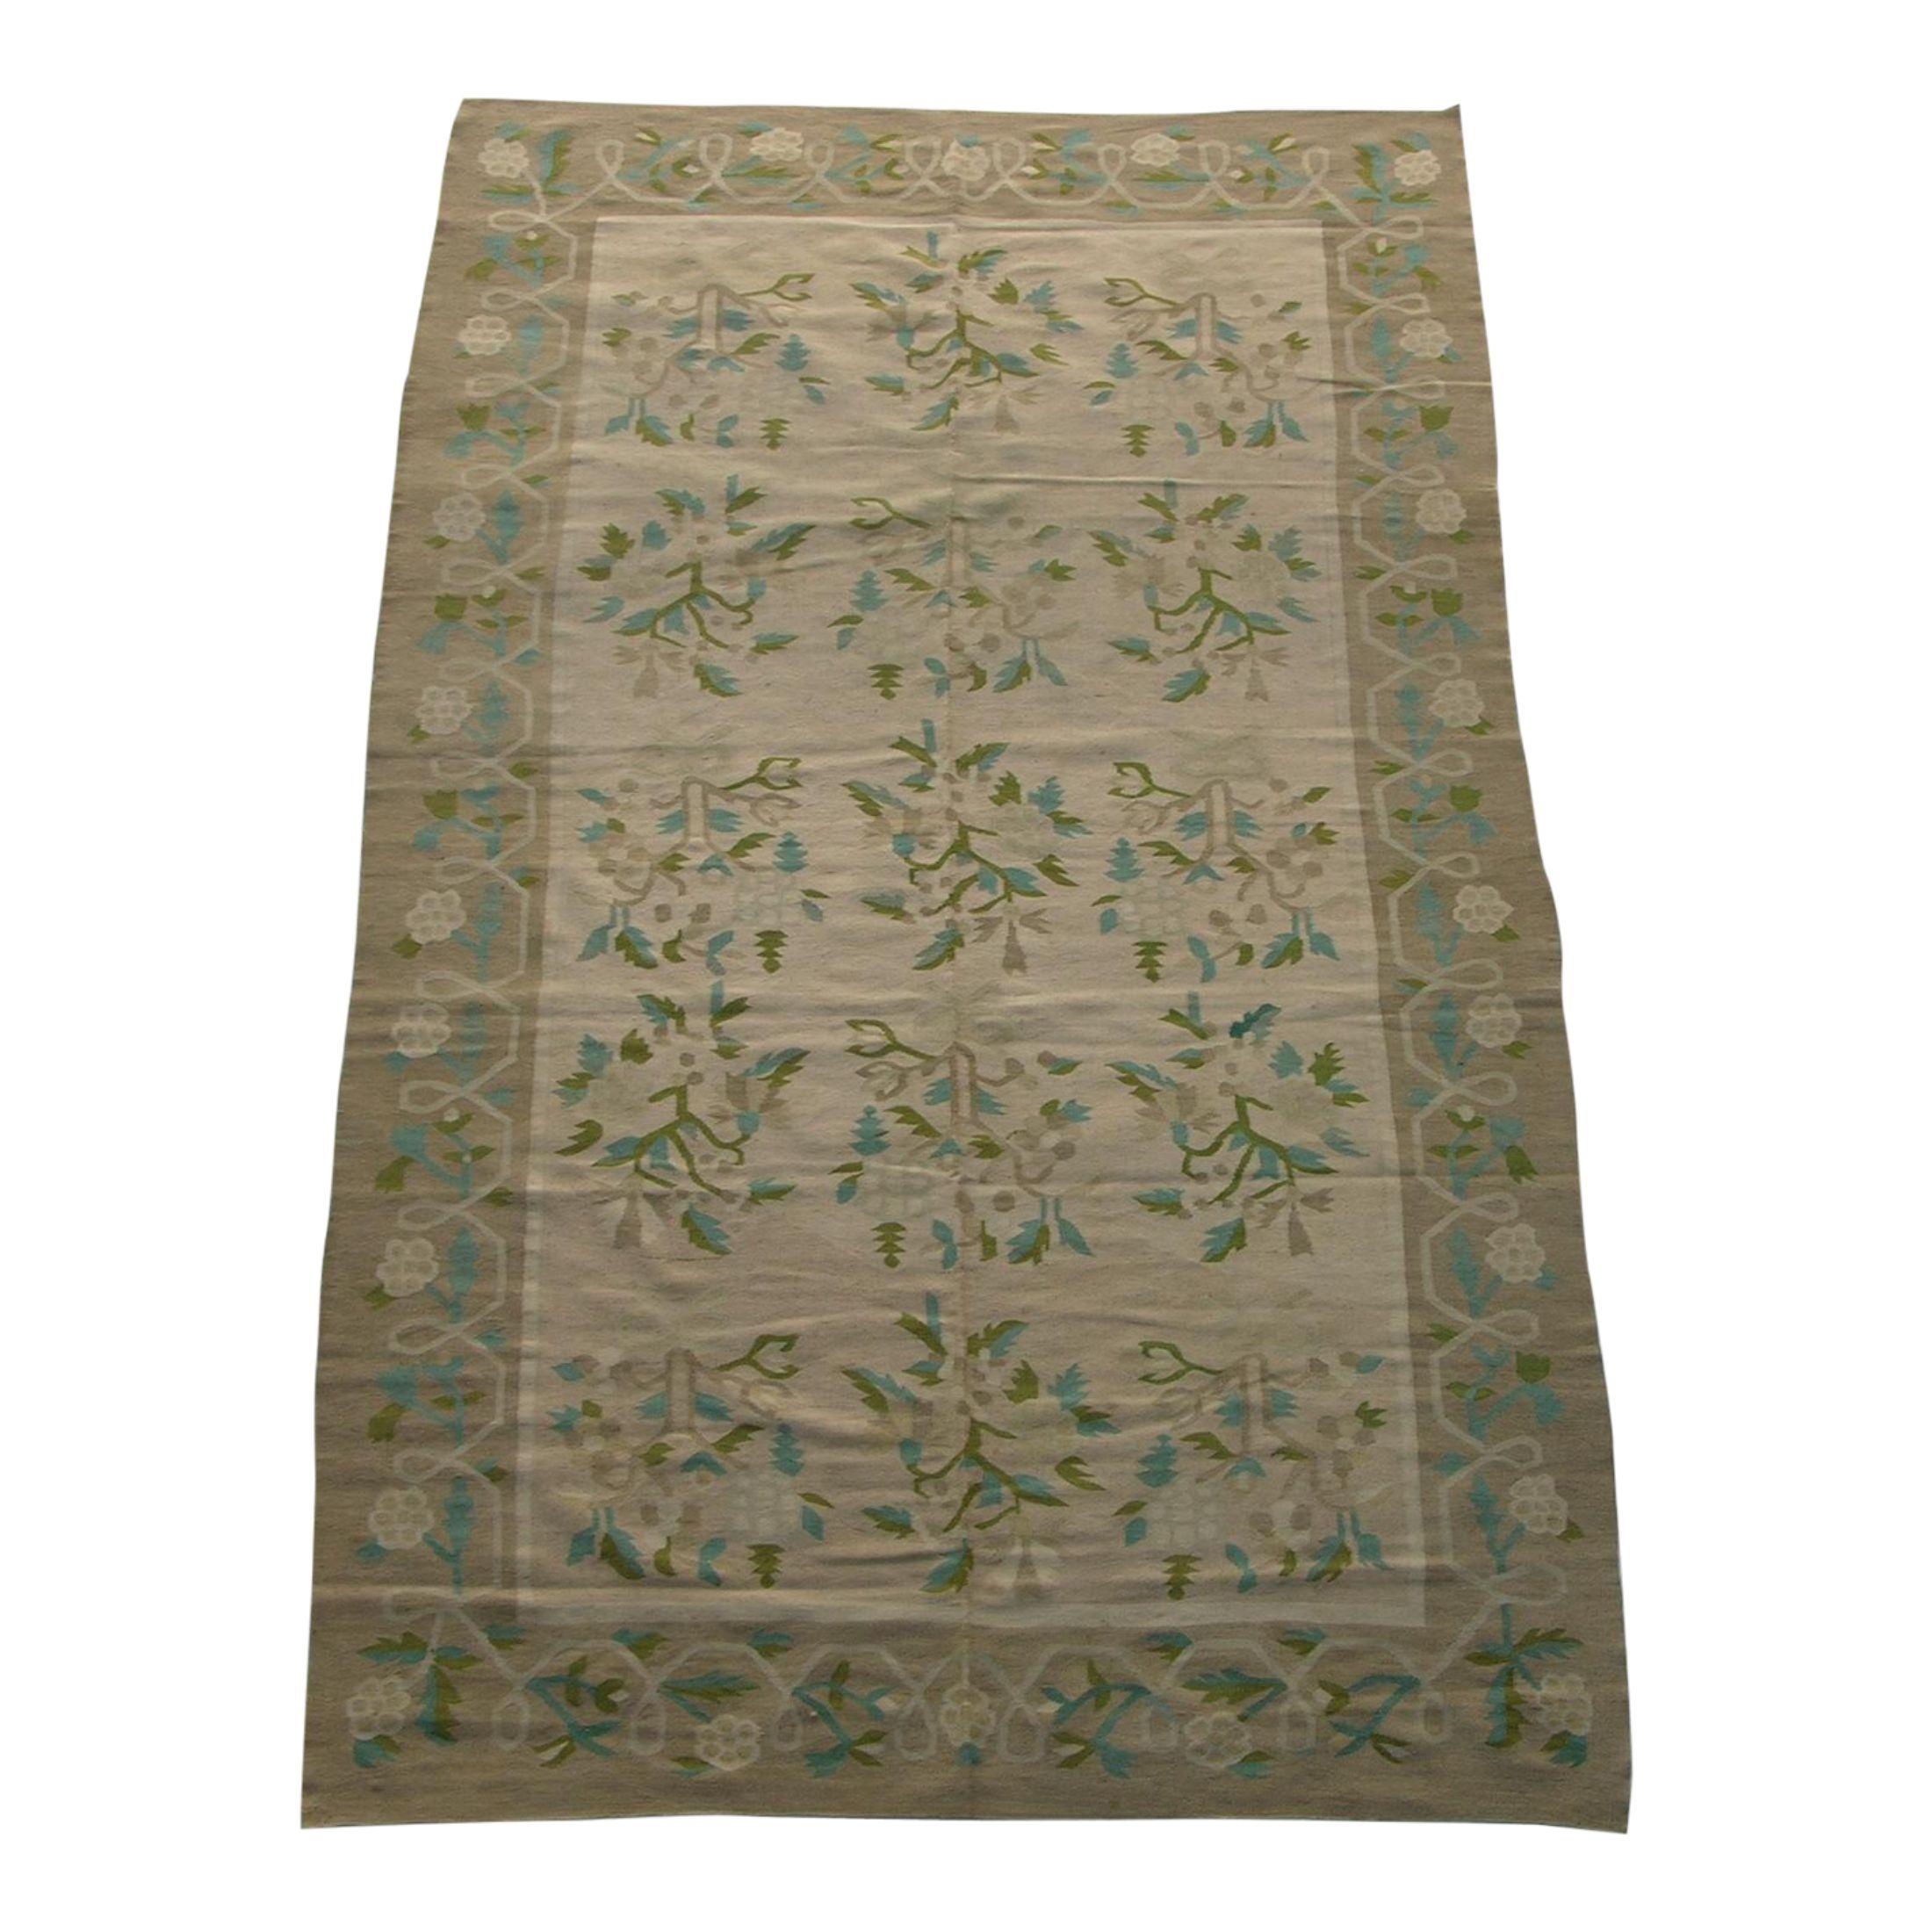 1850s Antique Central Asian Flat Weave Kilim Rug For Sale